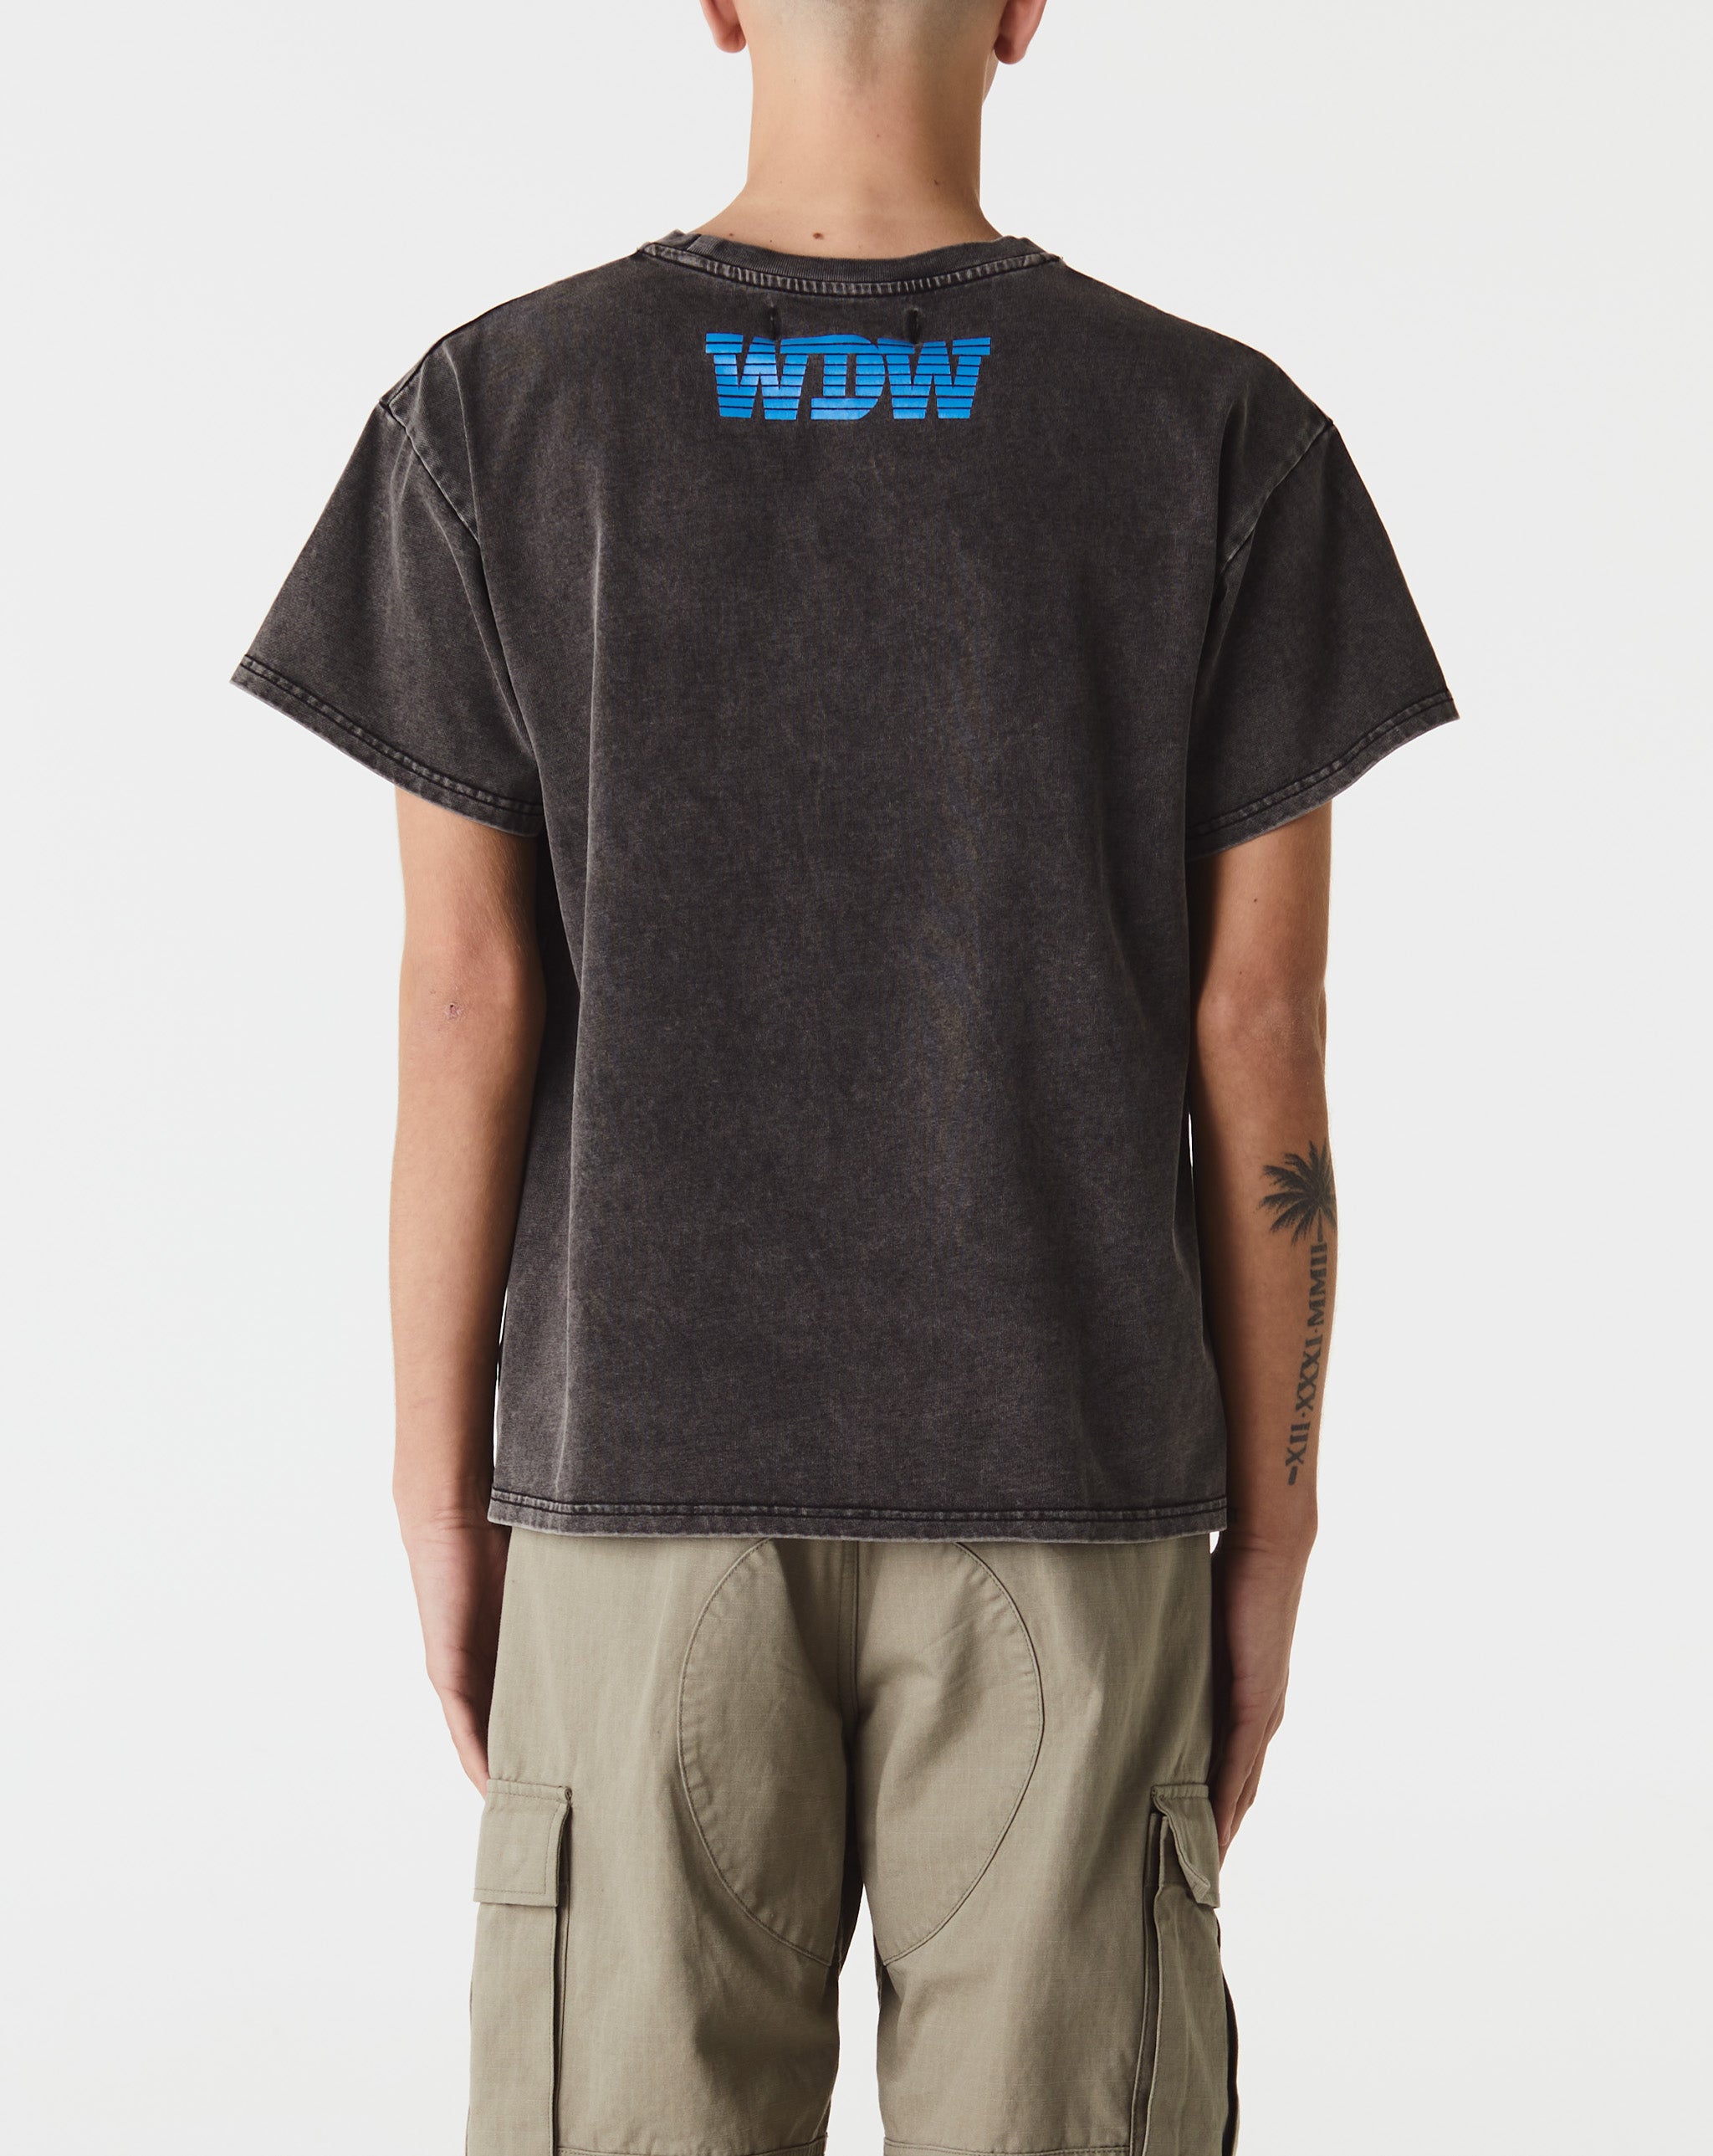 Who Decides War Transition T-Shirt  - Cheap 127-0 Jordan outlet